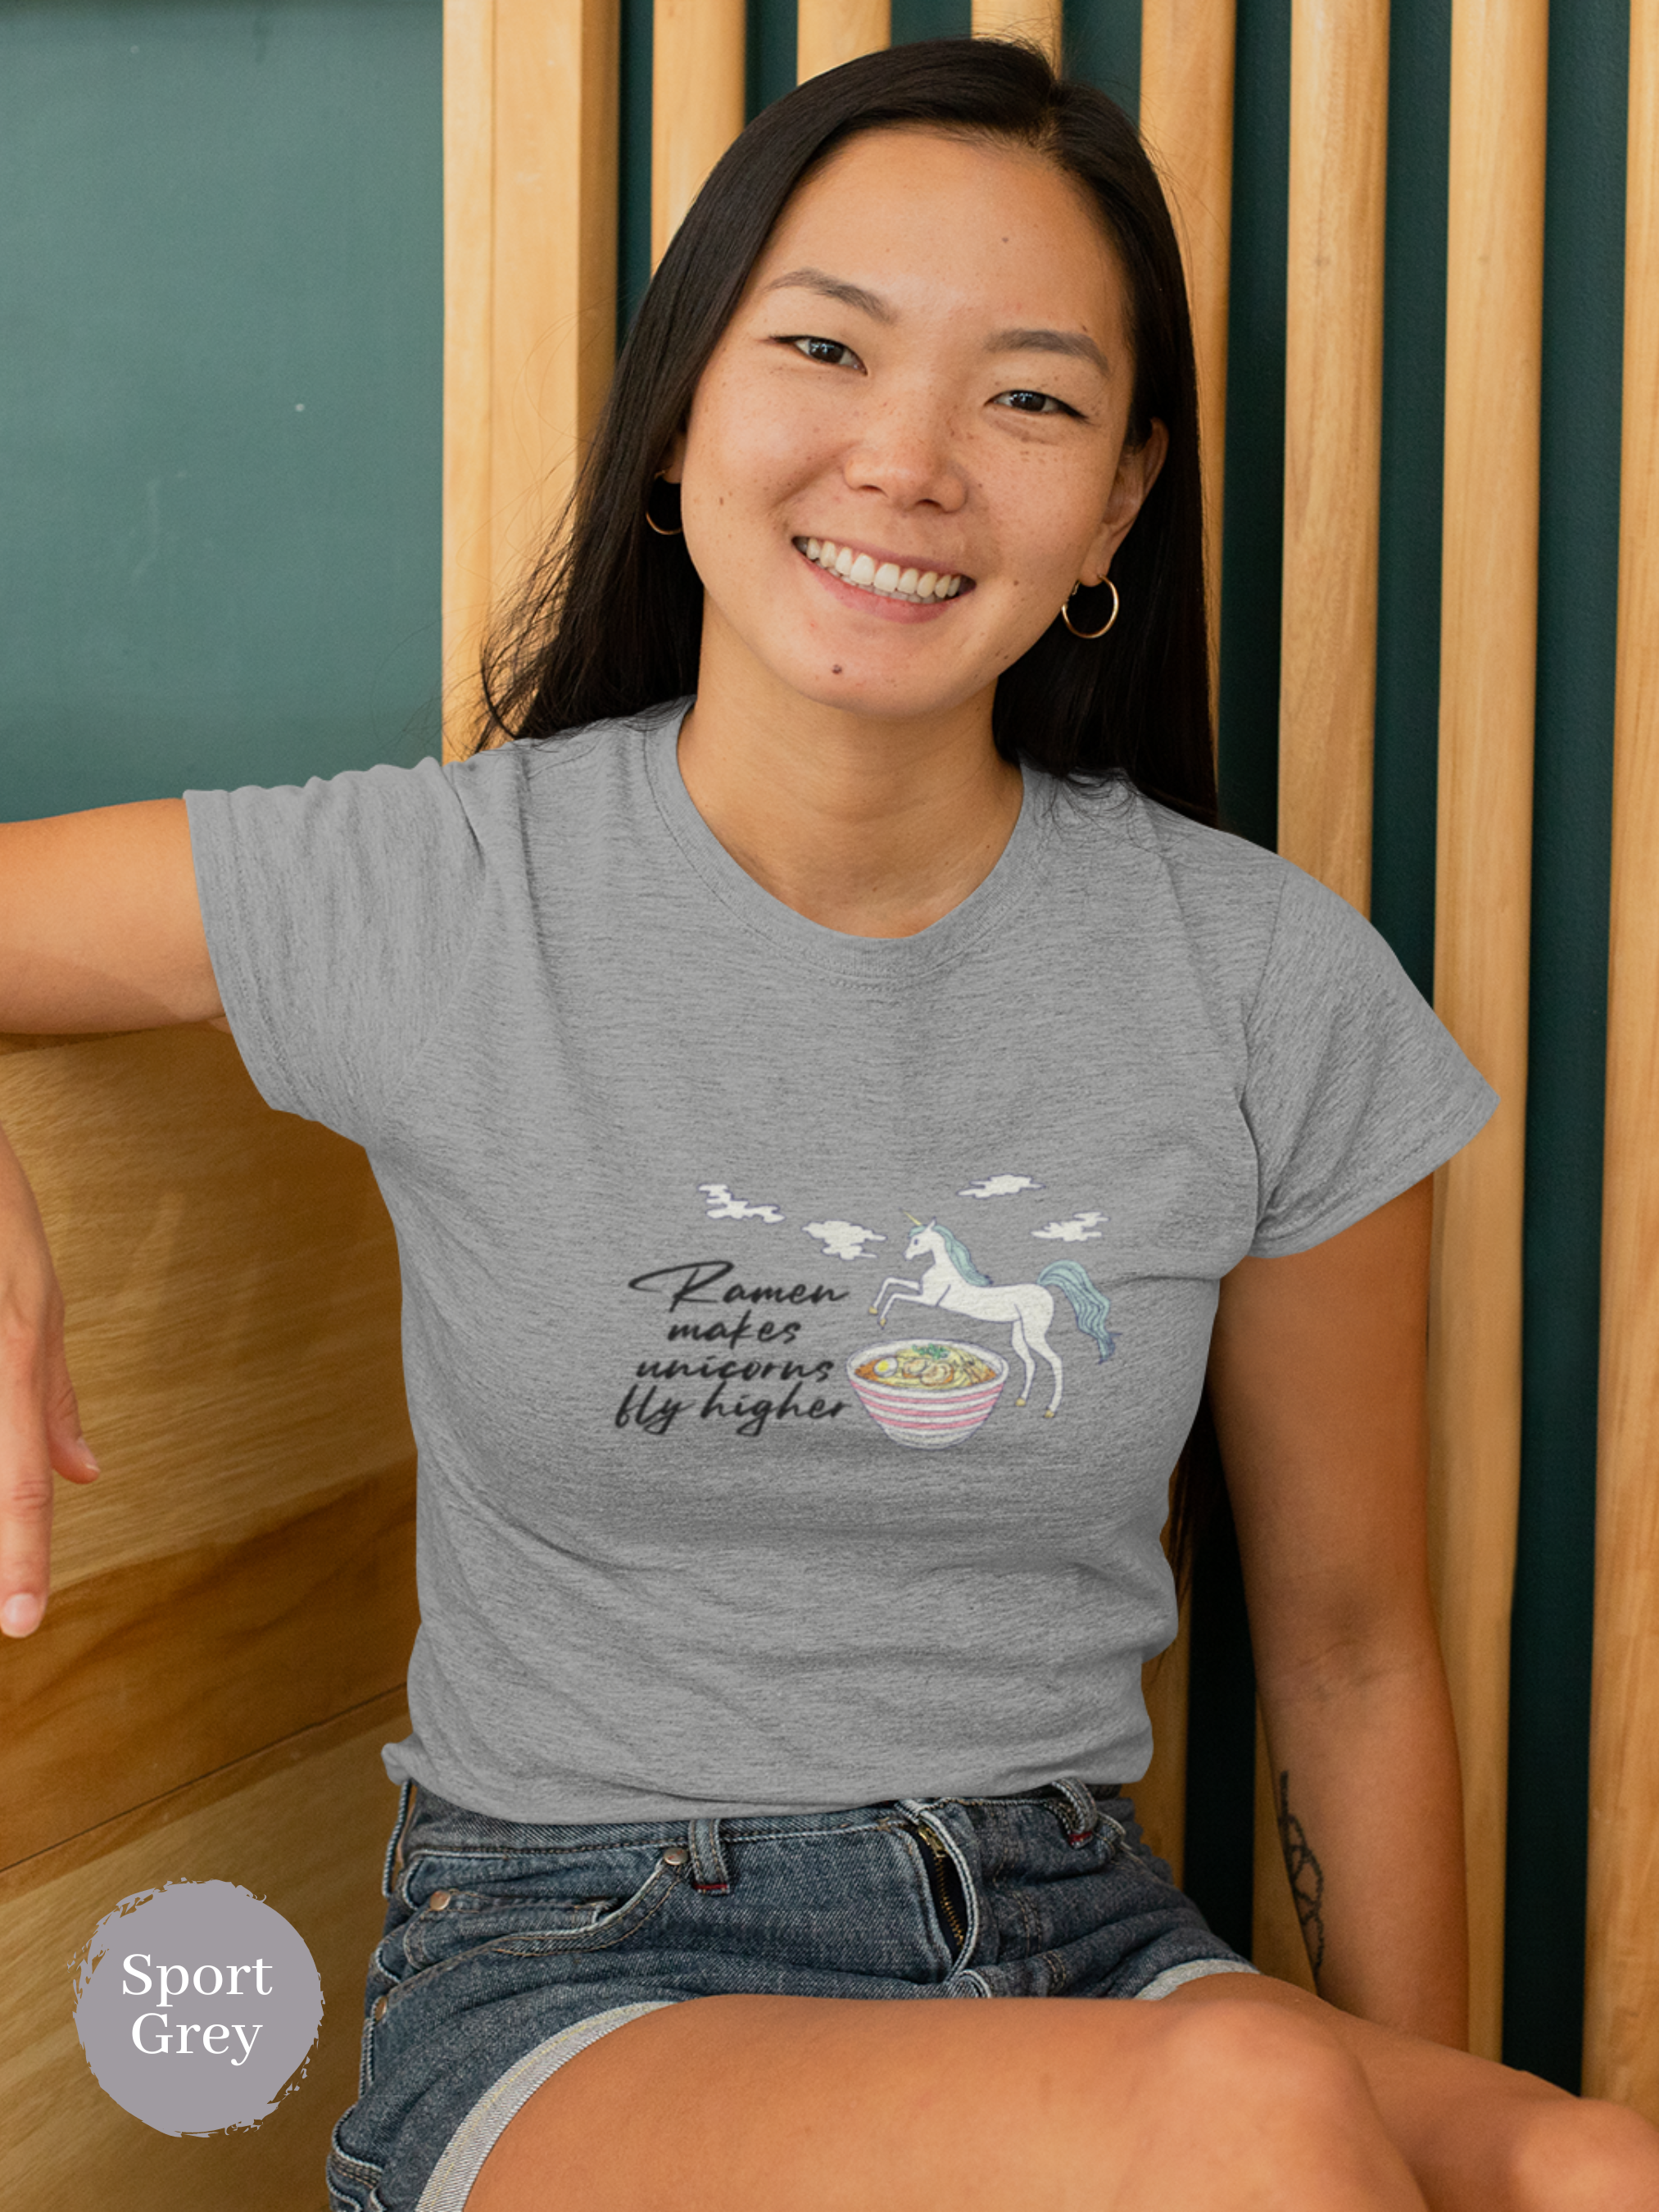 Ramen T-shirt: Ramen Makes Unicorns Fly Higher - Japanese Shirt for Foodies with Ramen Art and Unicorn Illustration